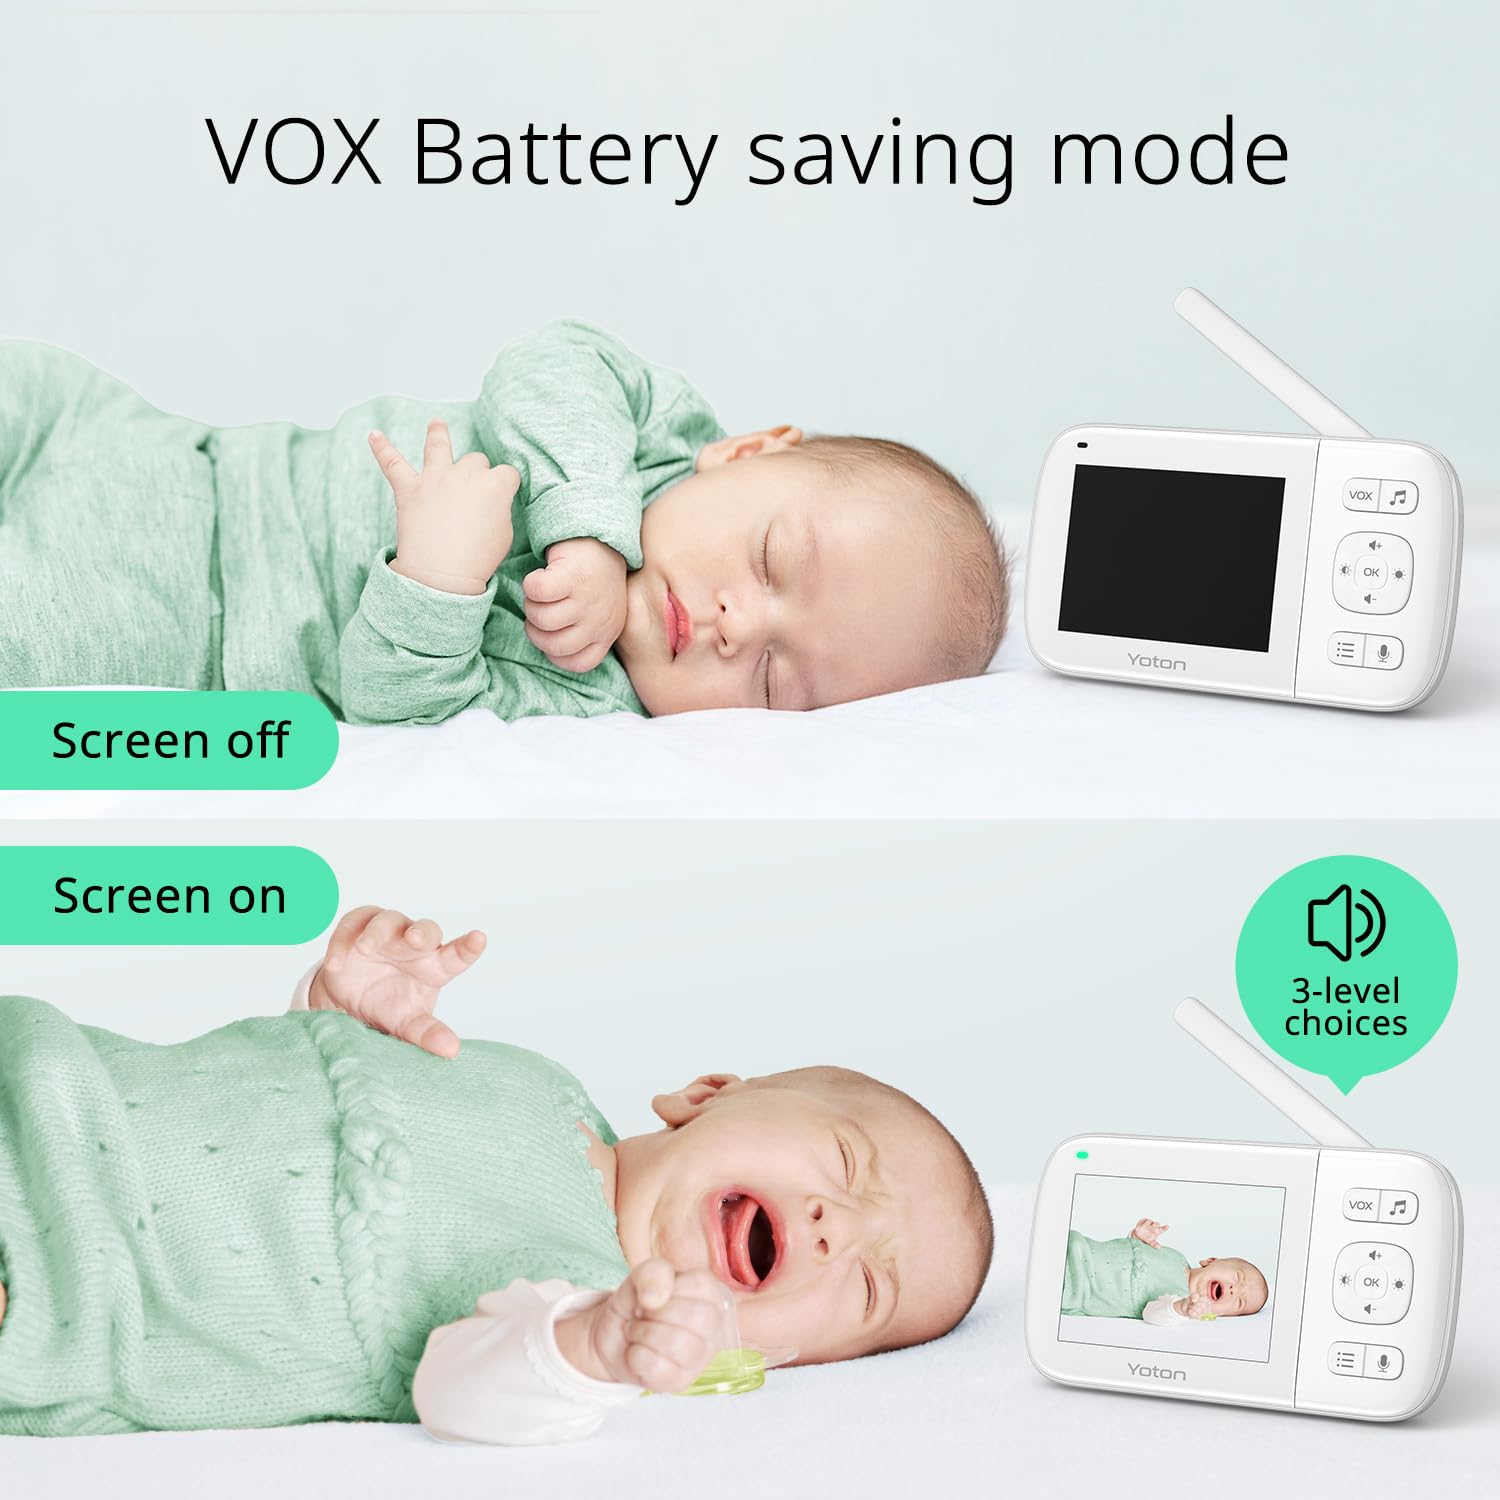 Yoton Babay Monitor YM05 vox battery saving mode